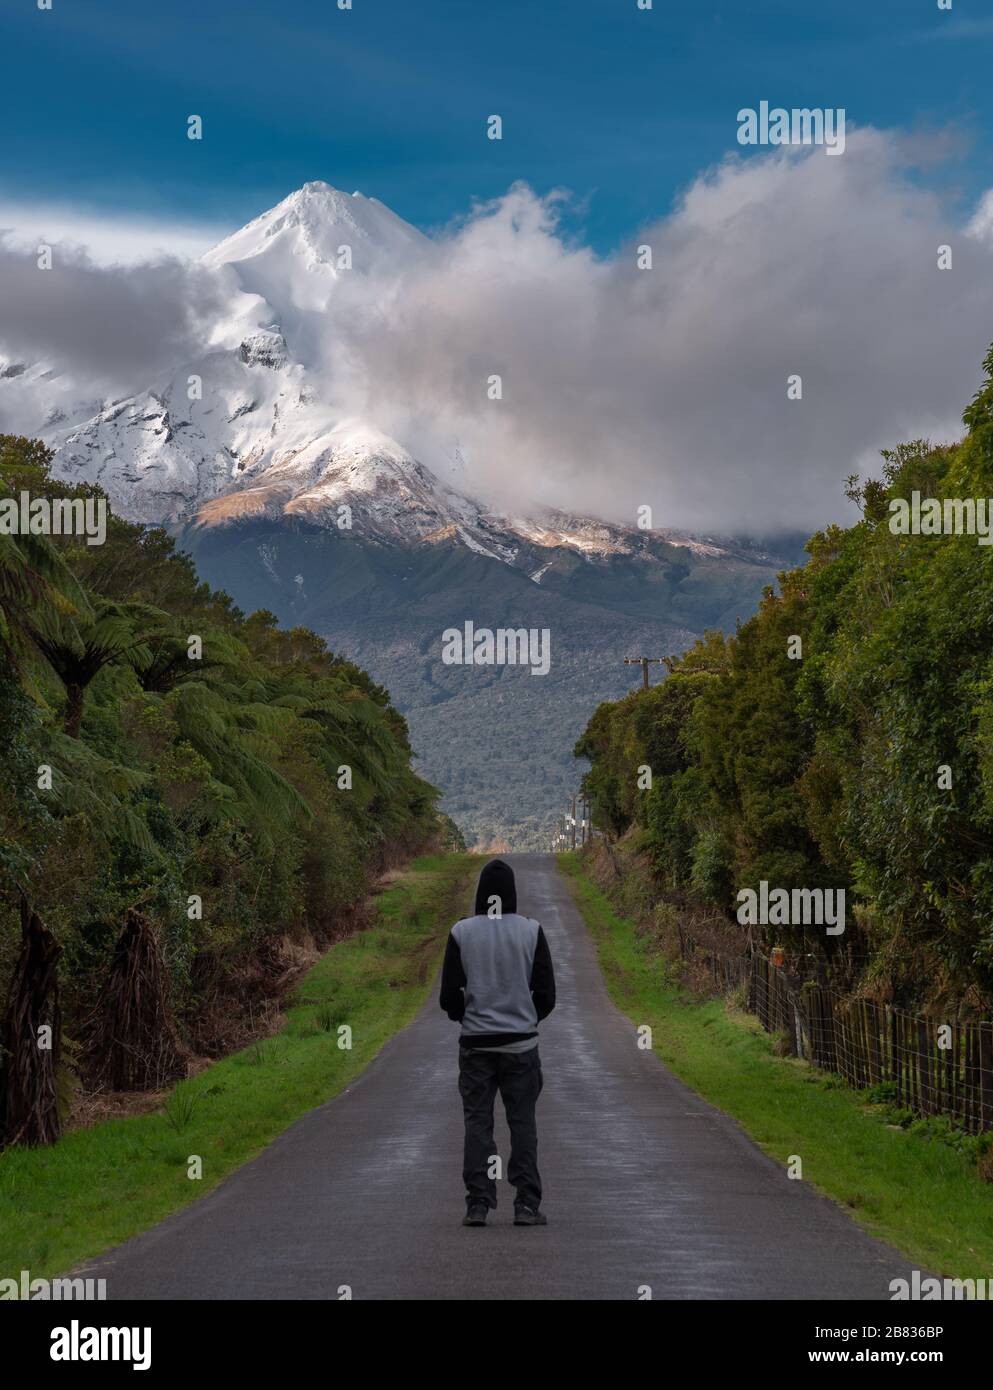 Person looking along a road towards a snow capped mountain. Mount Taranaki, New Zealand. Stock Photo